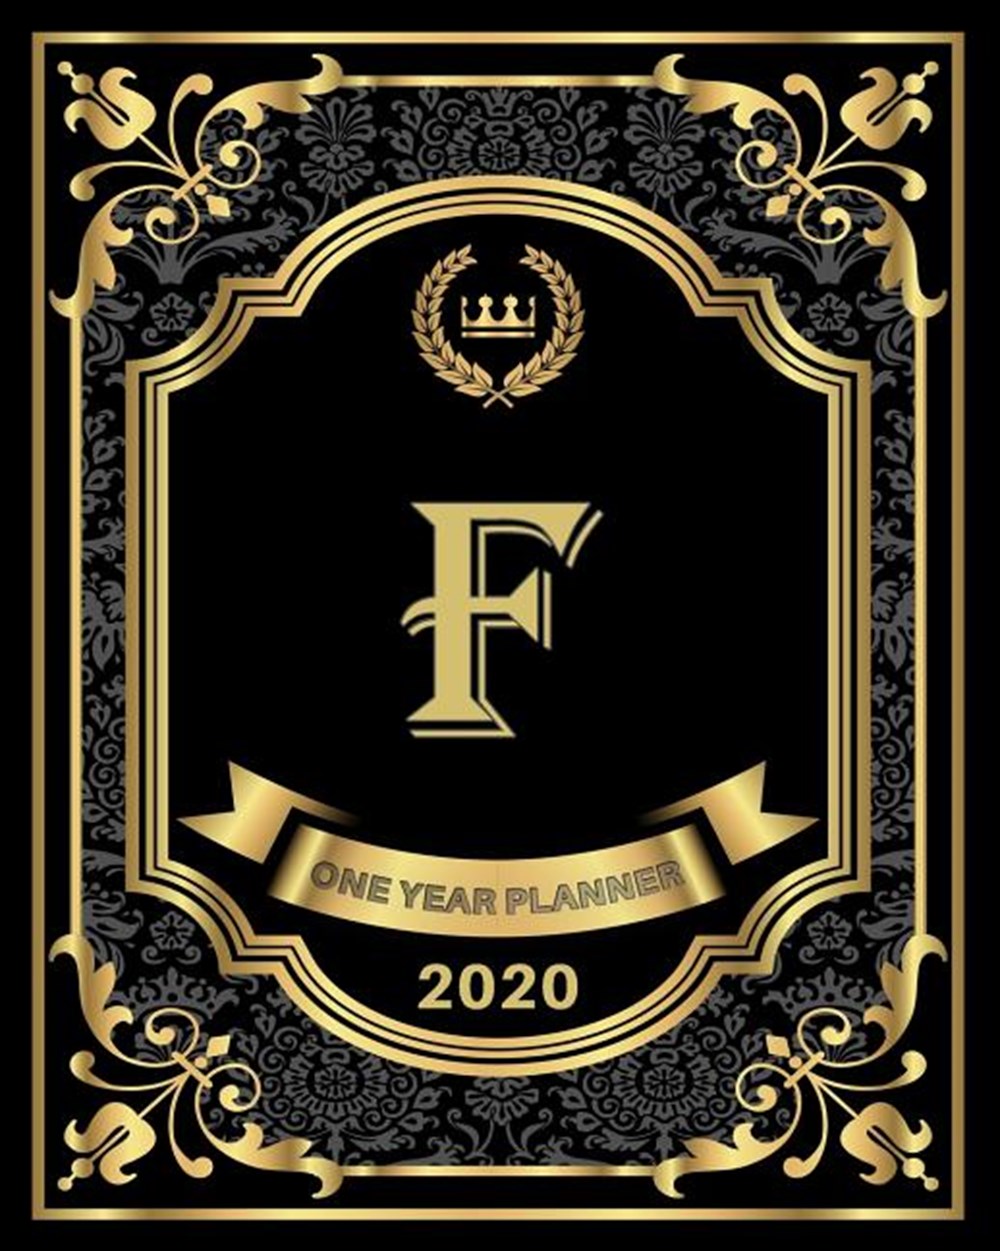 F - 2020 One Year Planner Elegant Black and Gold Monogram Initials - Pretty Calendar Organizer - One